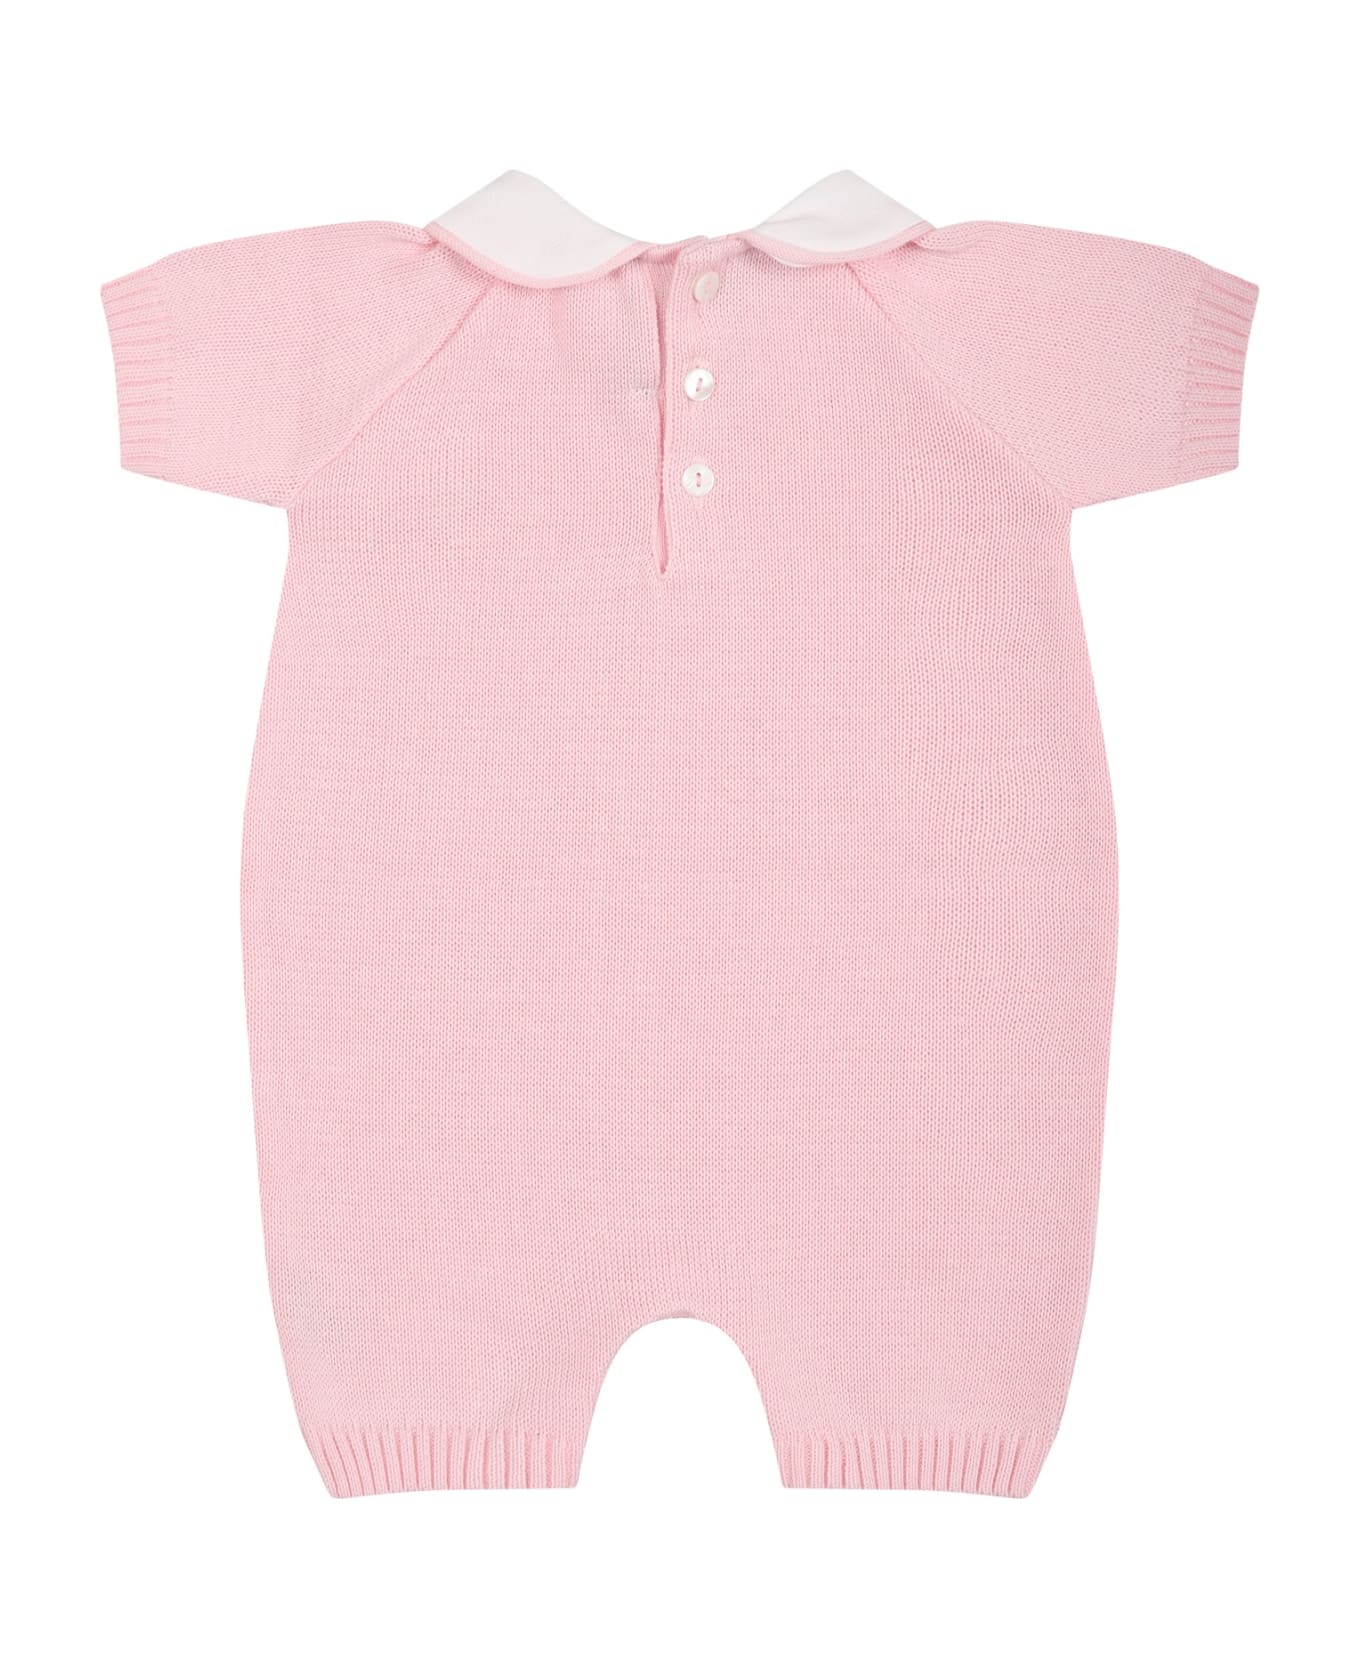 Little Bear Pink Romper For Baby Girl - Pink